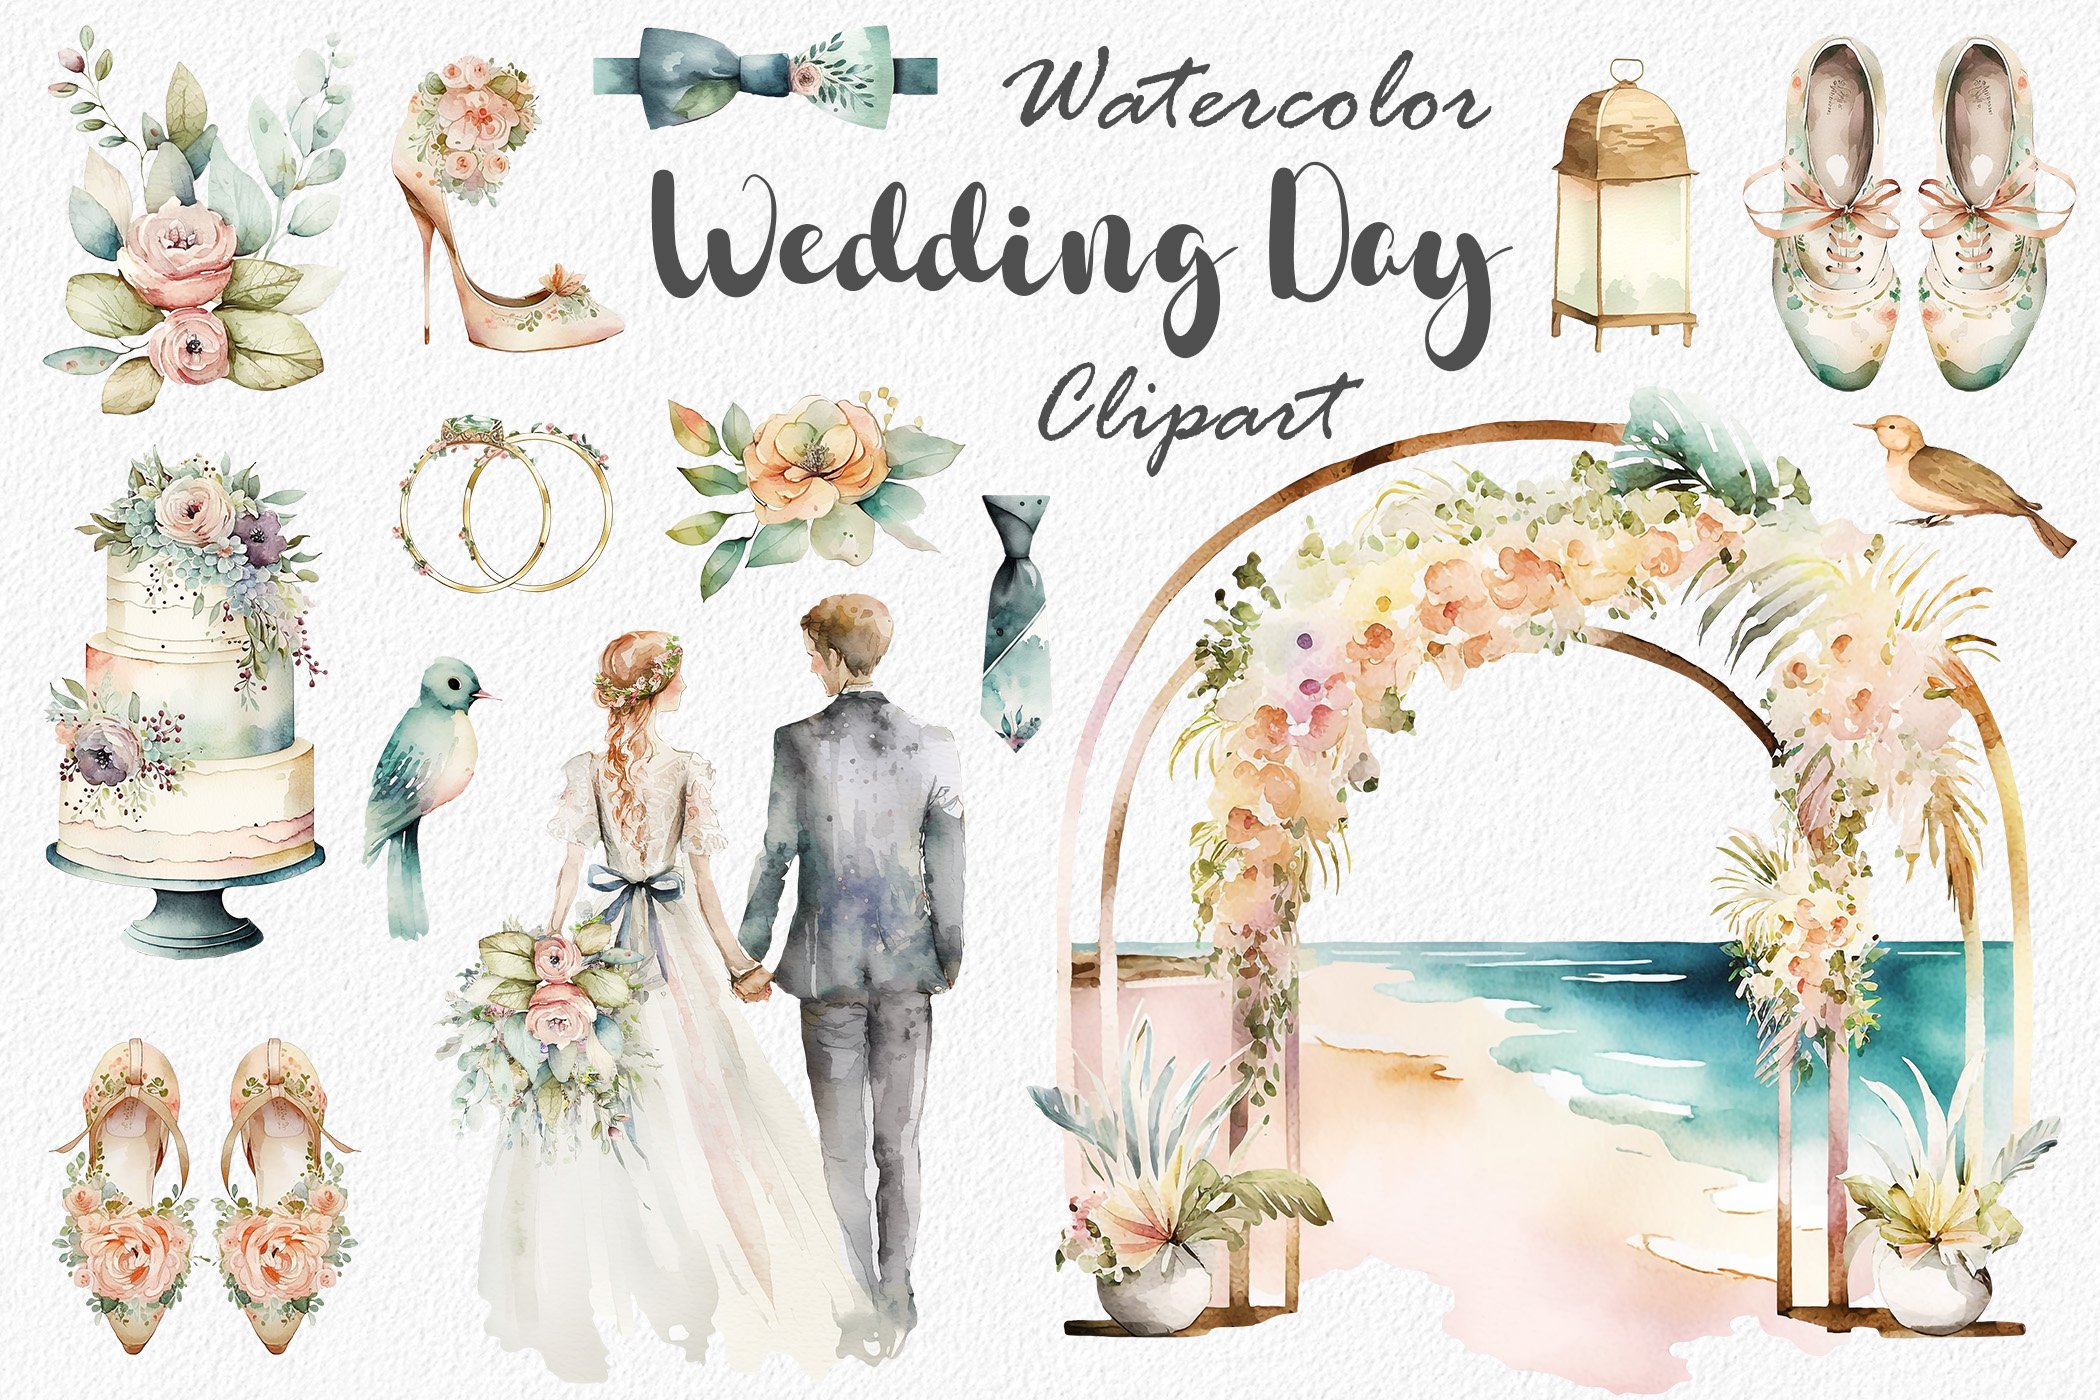 Watercolor Wedding Clipart, Bride cover image.